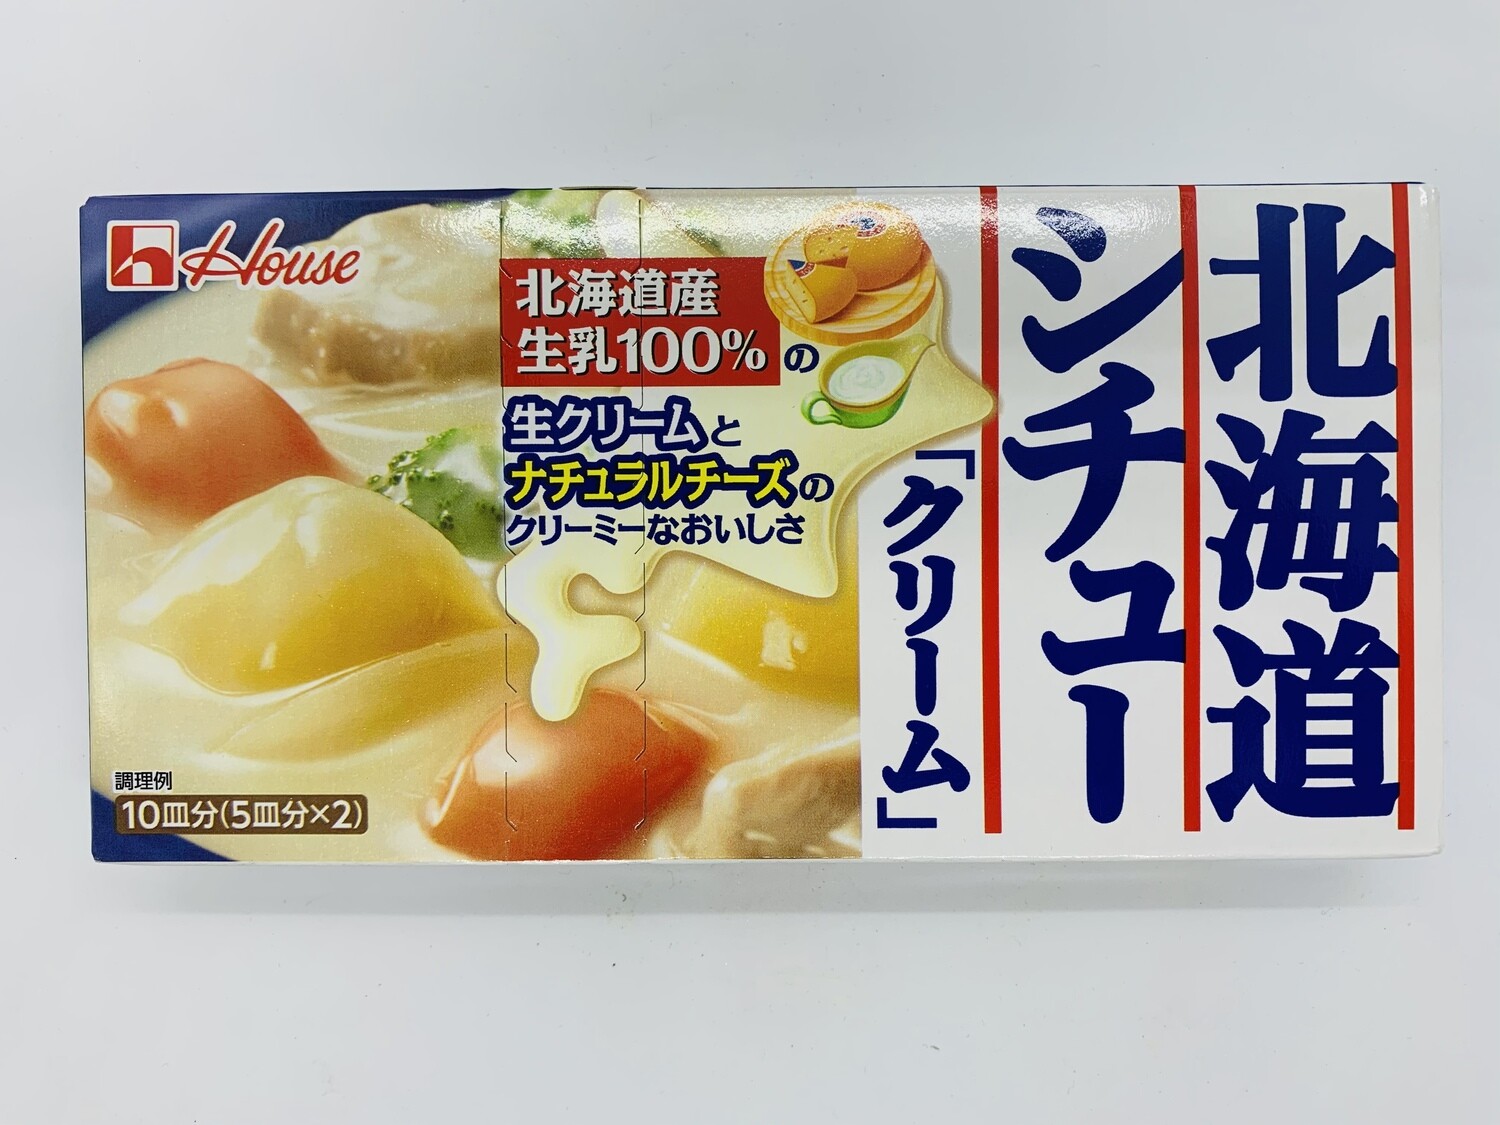 House Hokkaido Cream Stew